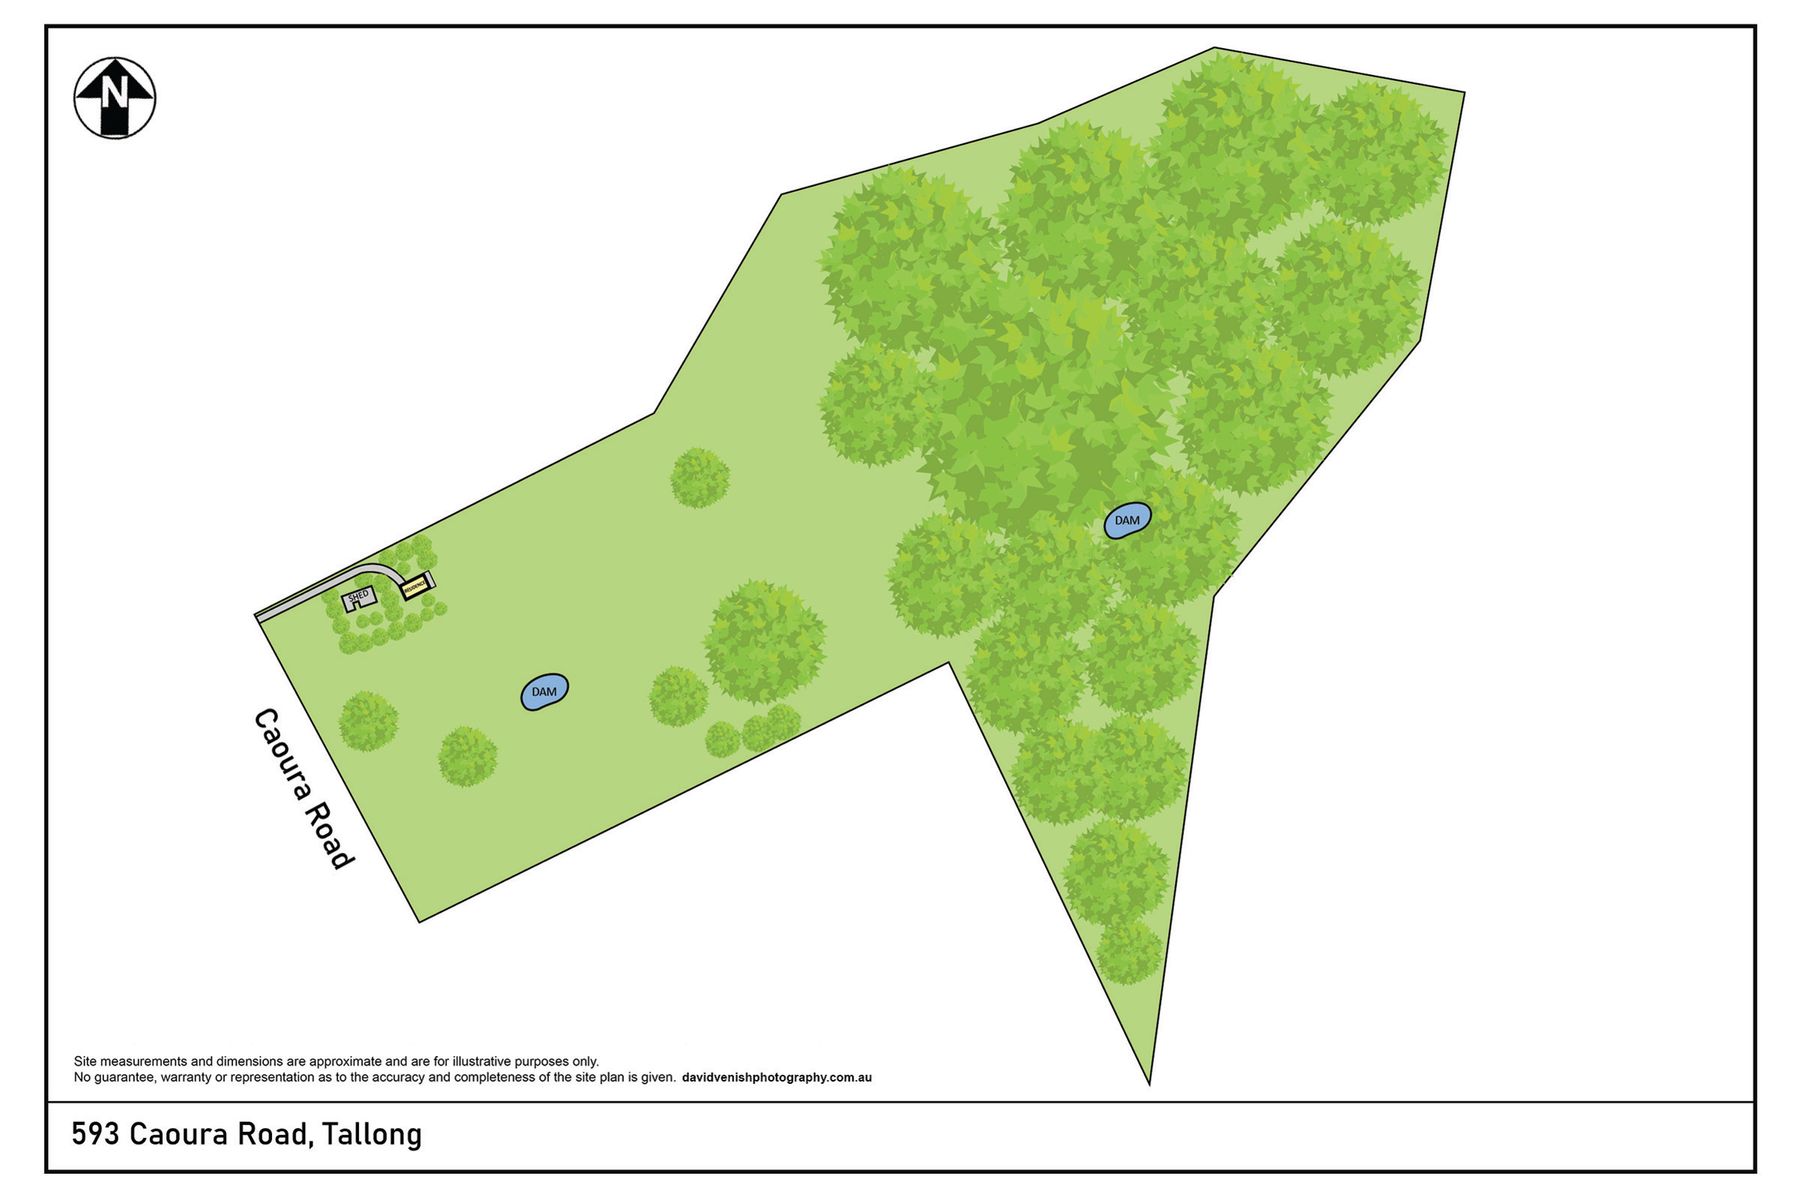 593 Caoura Road, Tallong   Site Plan